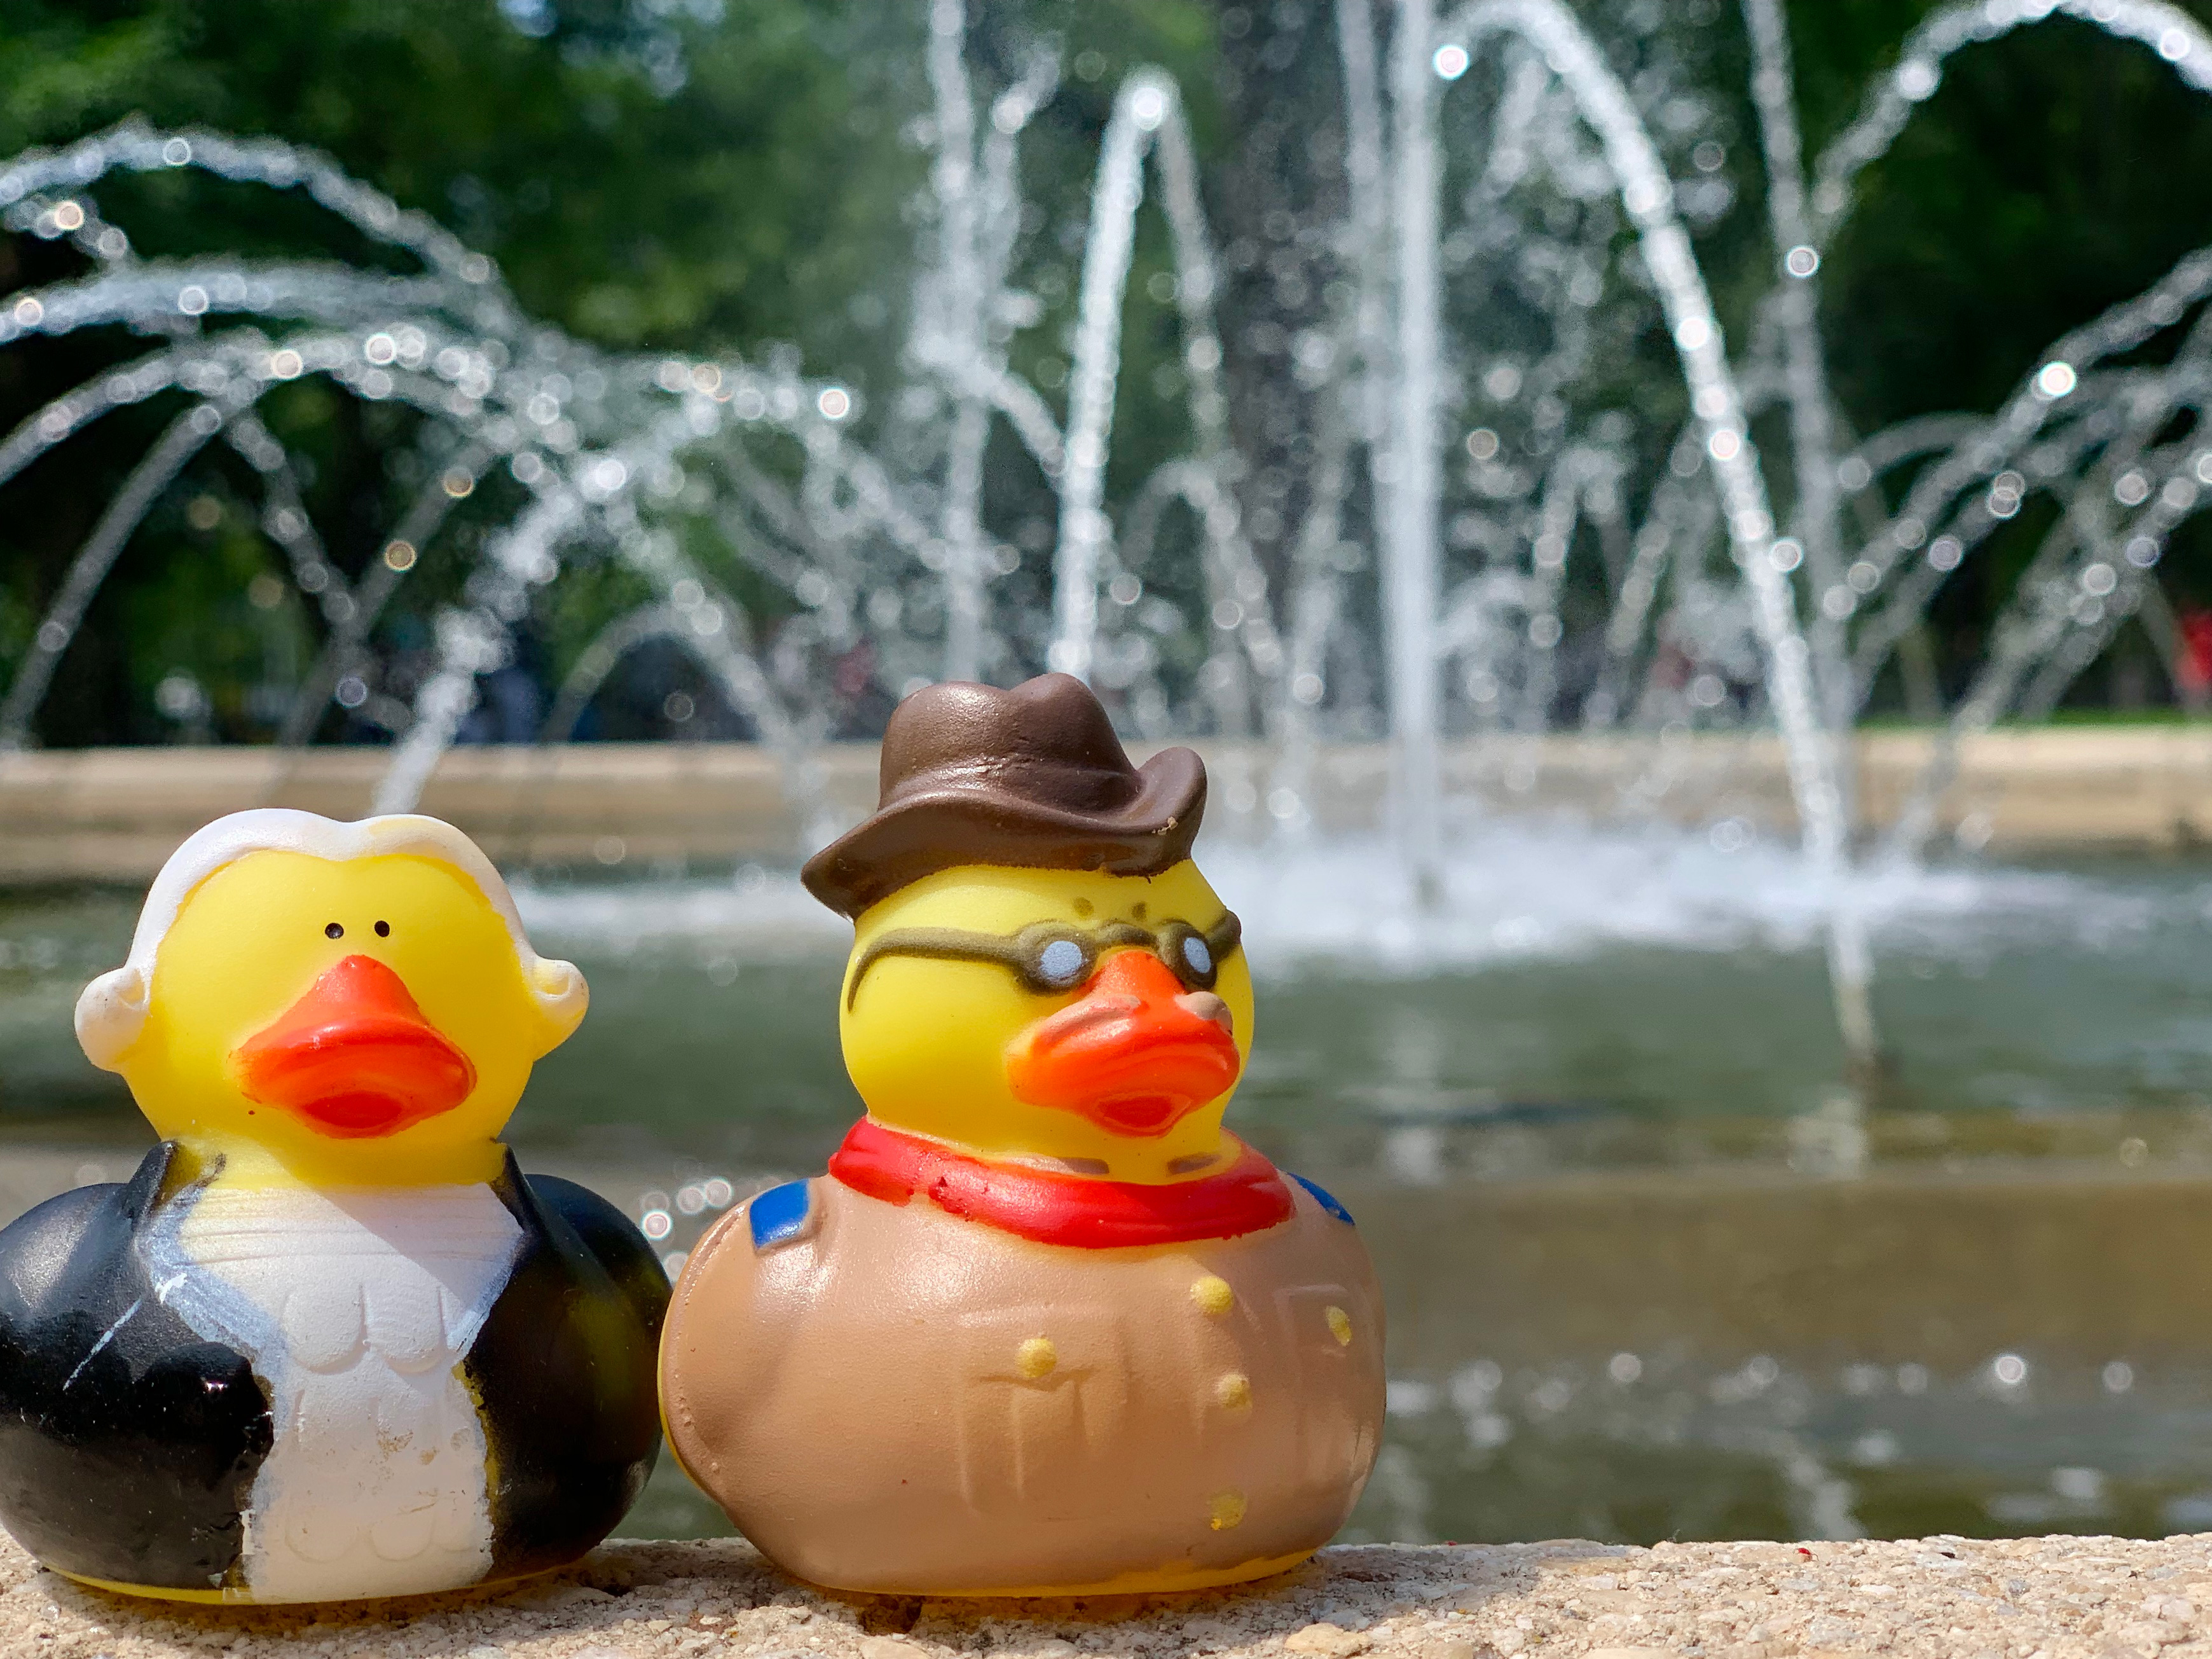 Summer Fountain Fun with Presidential Duckies